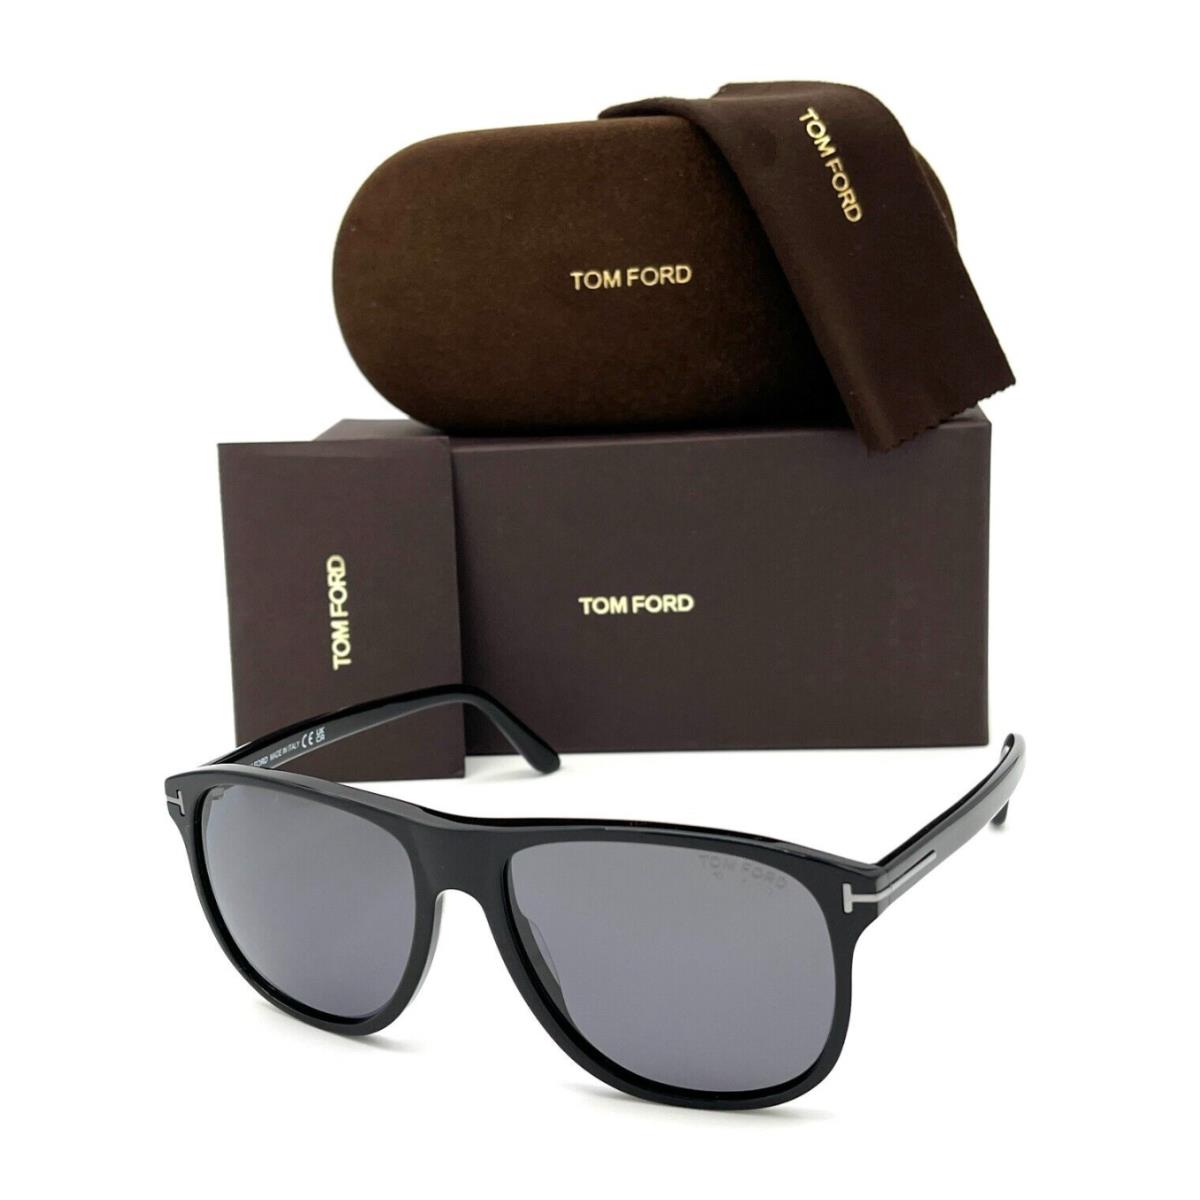 Tom Ford Sunglasses Joni TF 905-N 01D 56-16 Black Frames W/grey Polarized Lenses - Frame: Black, Lens: Smoke Grey Gradient Polarized